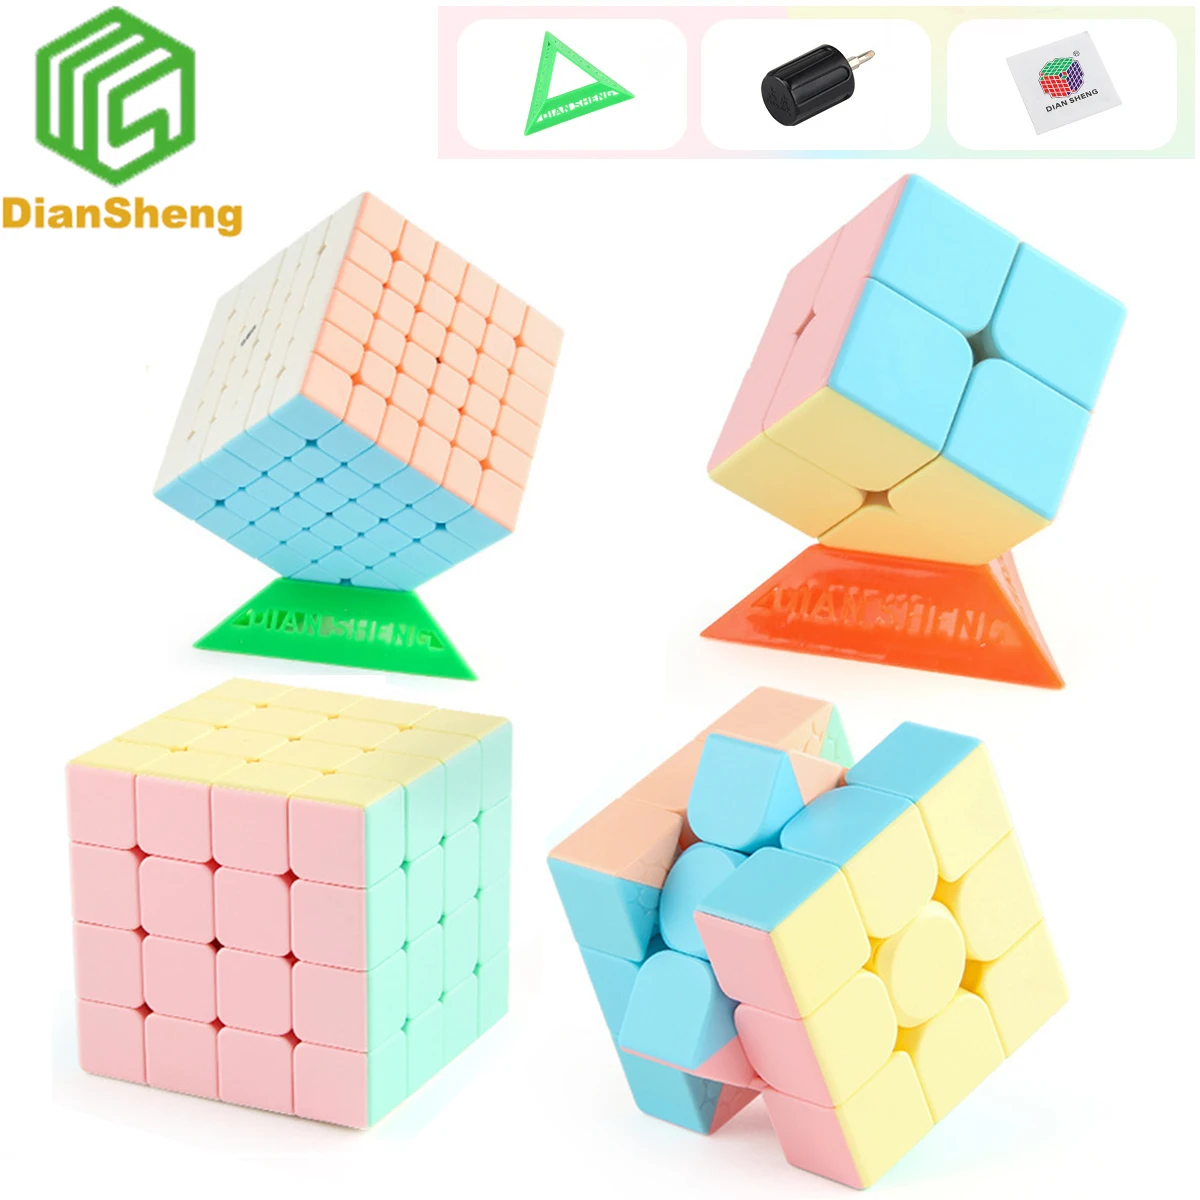 DianSheng Maracon Magic Cube Stickerless 2x2 3x3 4x4 5x5 6x6 7x7 Megaminx  Speed Puzzle Cubes Toys Cubos Magicos for Children - AliExpress